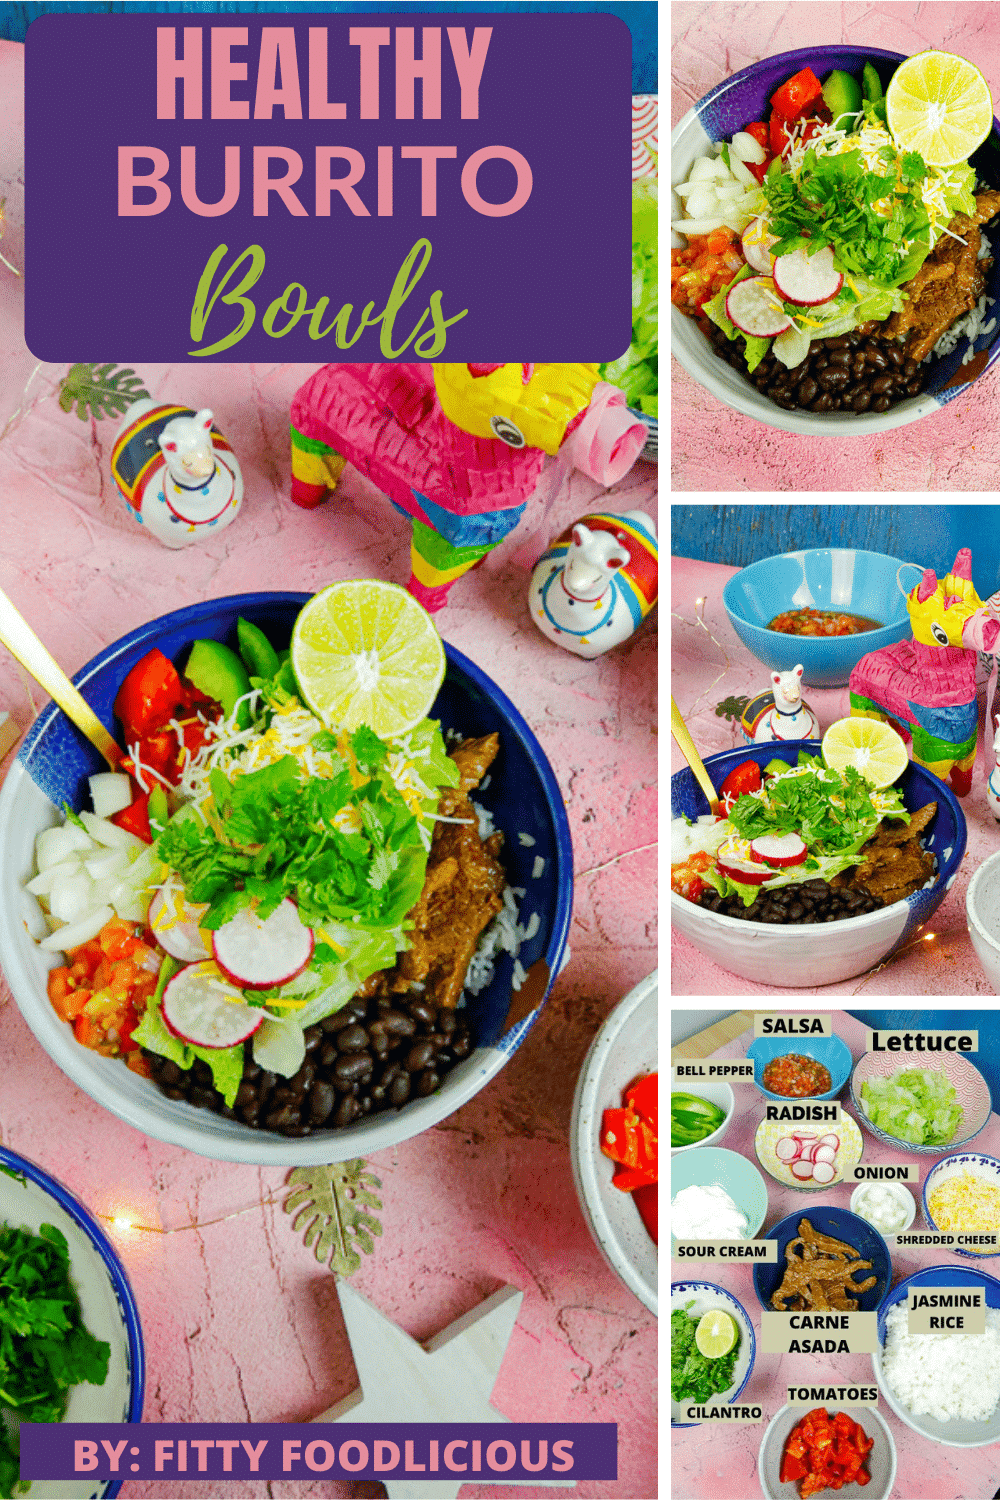 Healthy Burrito Bowls, Burrito Bowls, Chipotle, Mexican Food, Carne Asada, Veggies